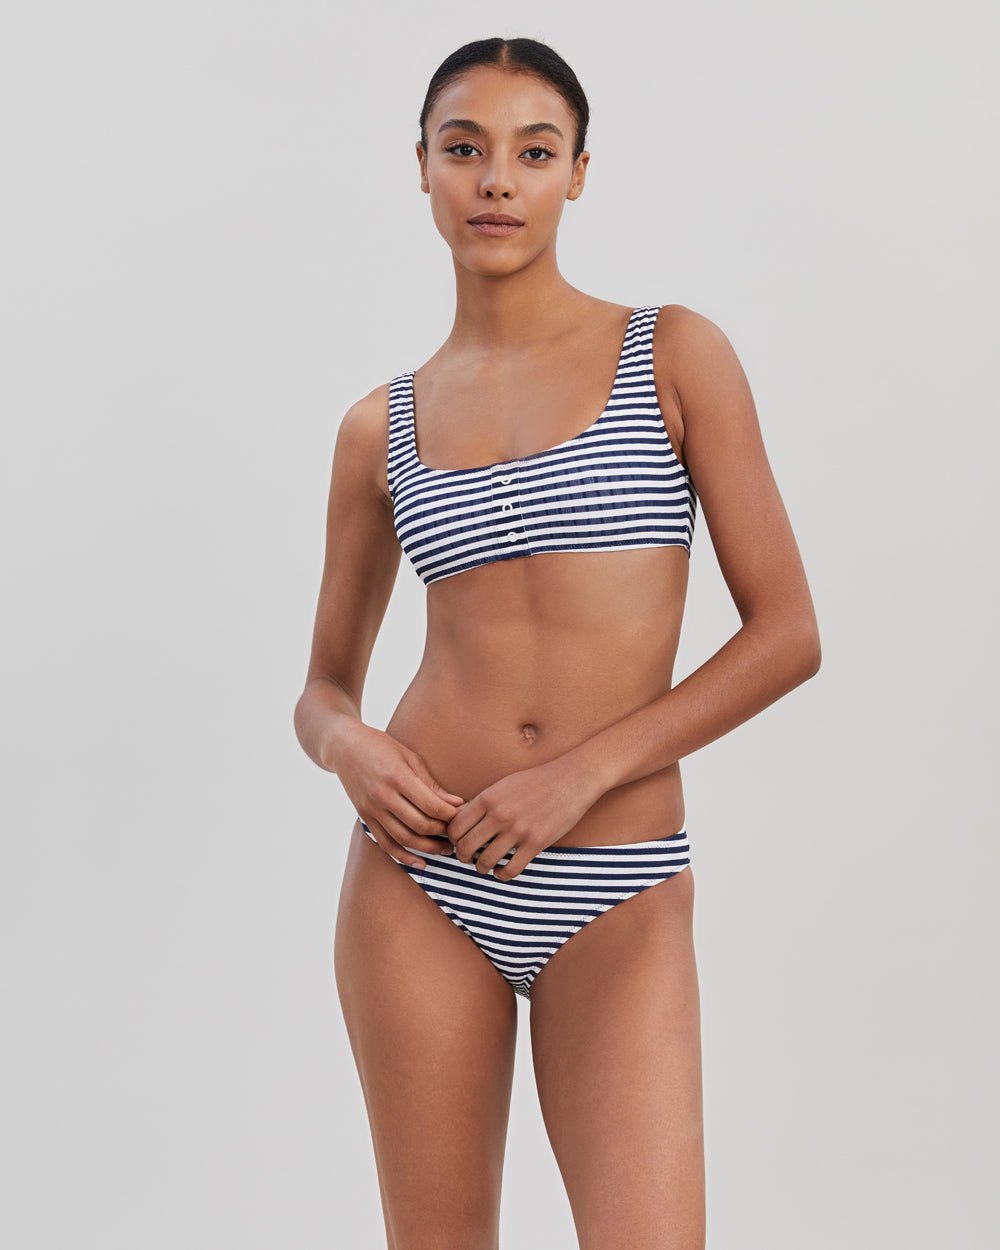 Bikinis - Bikini Tops, Bikini Bottoms, Bikini Sets | Solid & Striped